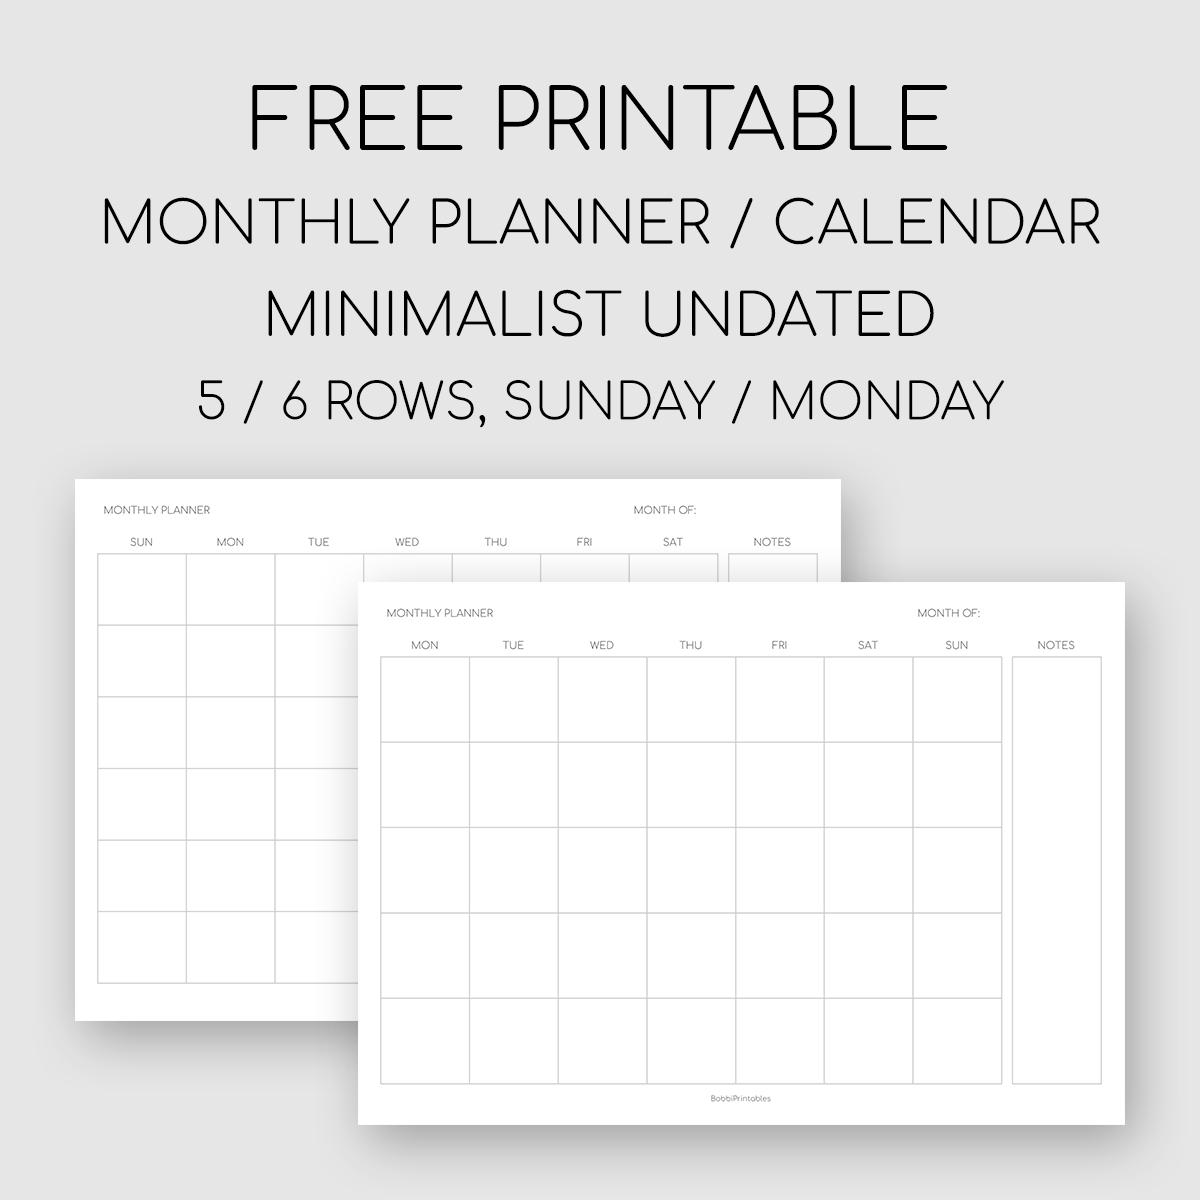 Bobbiprintables — Free Printable Minimalist Monthly Planner /